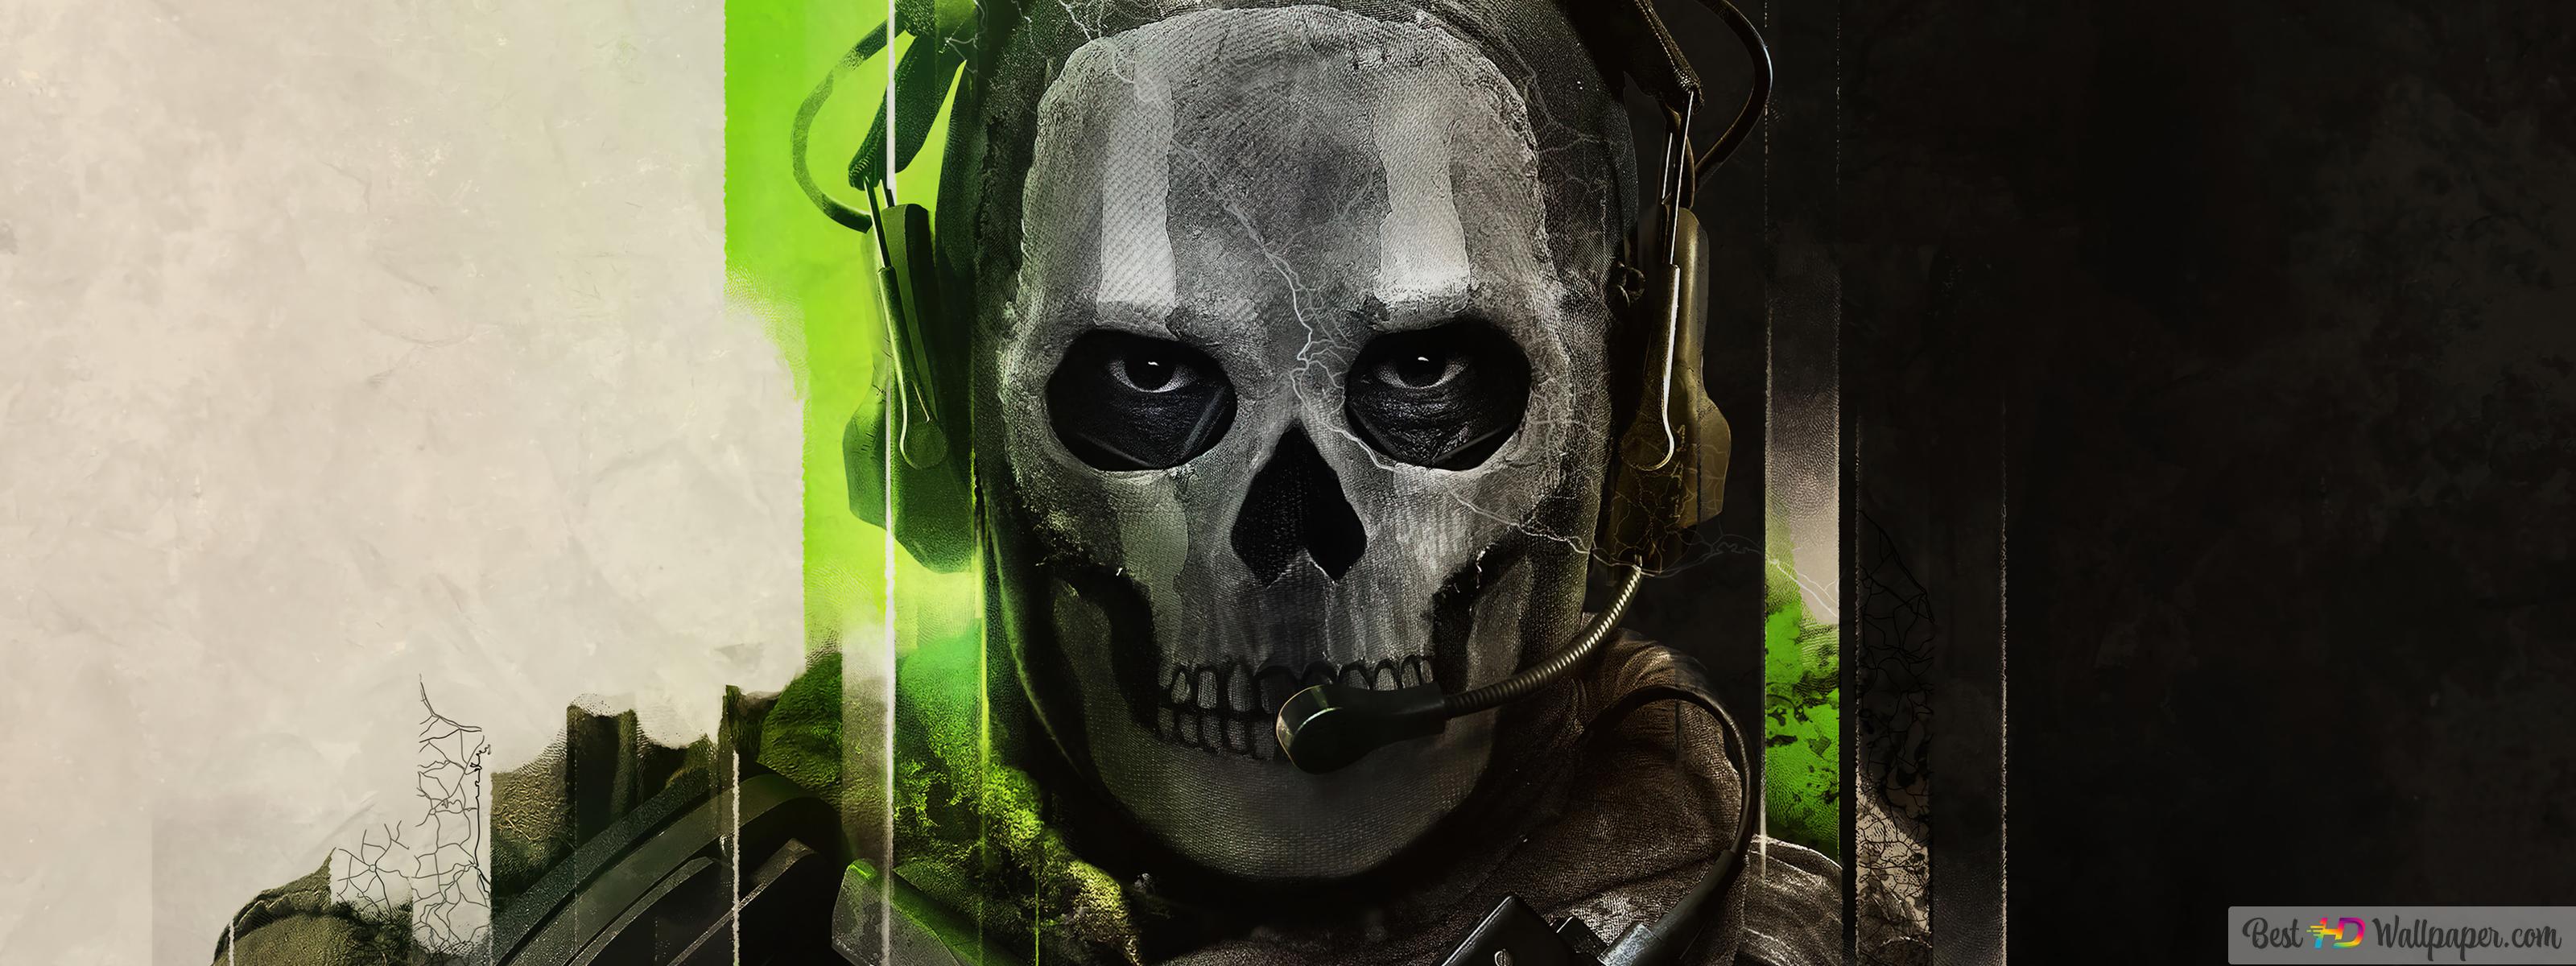 Call of Duty: Modern Warfare 2 close up 4K wallpaper download